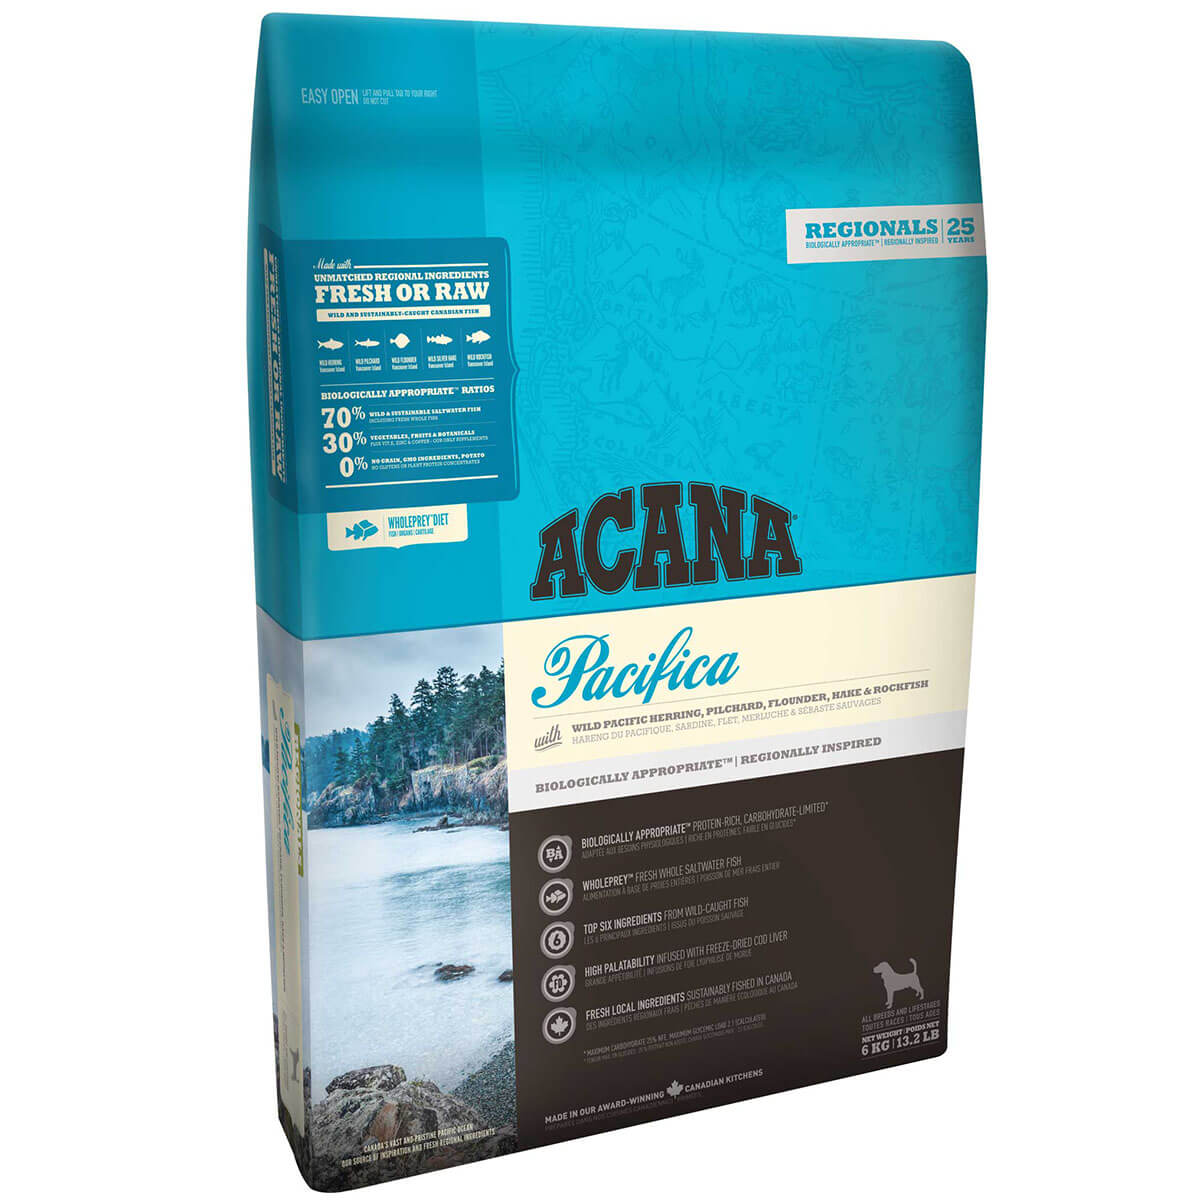 Acana Pacifica Dog Food - 11.4 kg